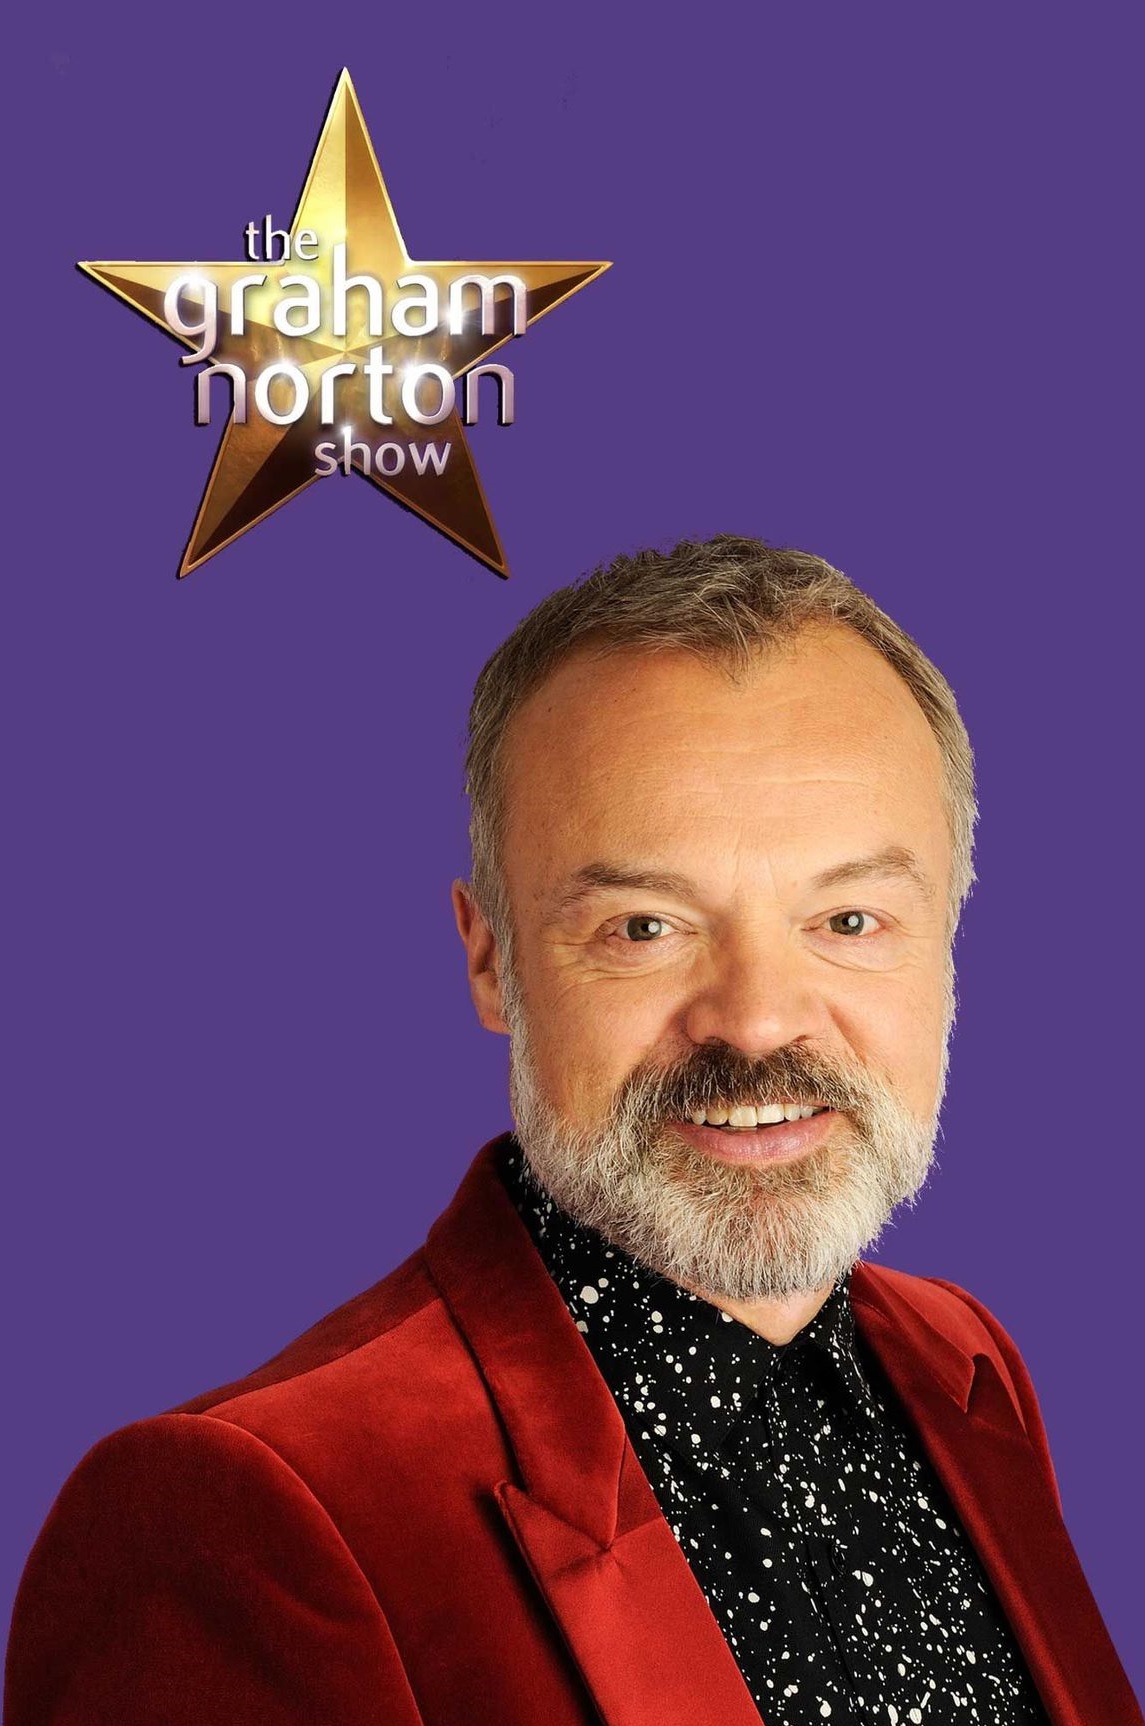 The Graham Norton Show - Season 25